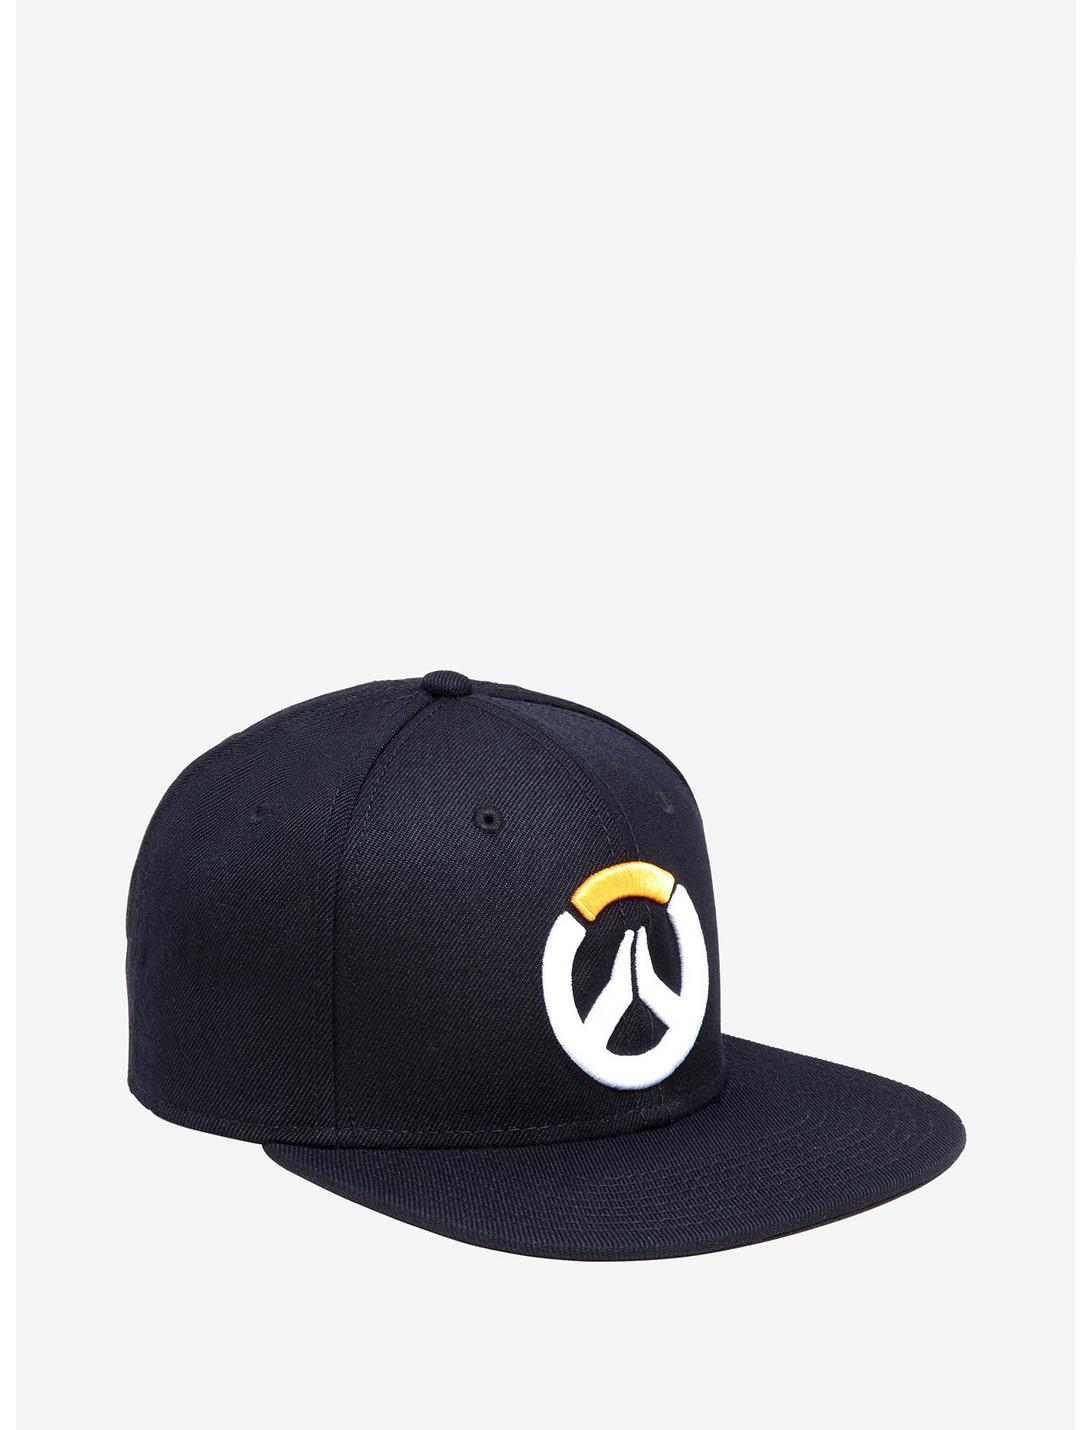 Overwatch Logo Snapback Hat, , hi-res